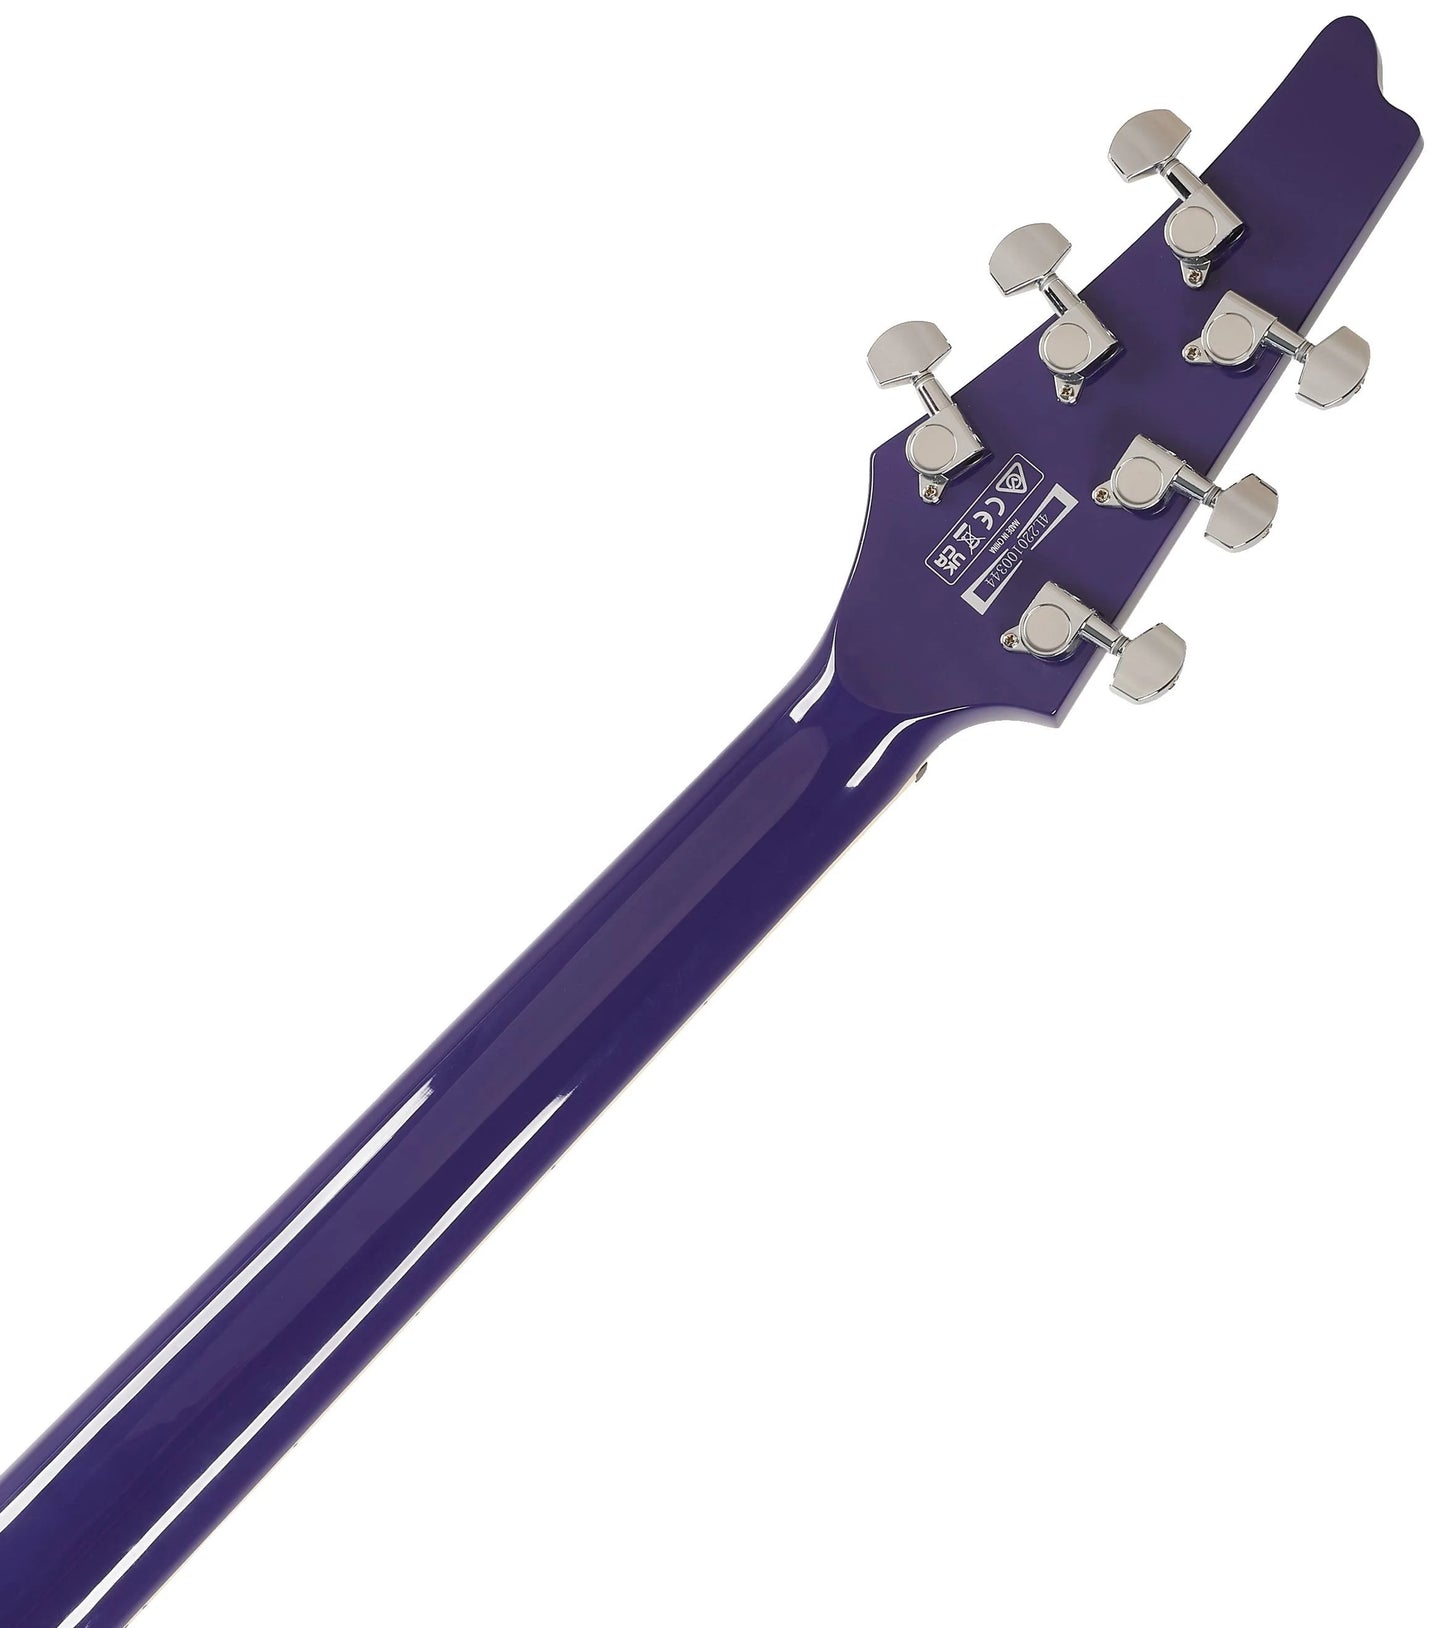 Ibanez Paul Gilbert Signature FRM300PR Electric Guitar in Purple